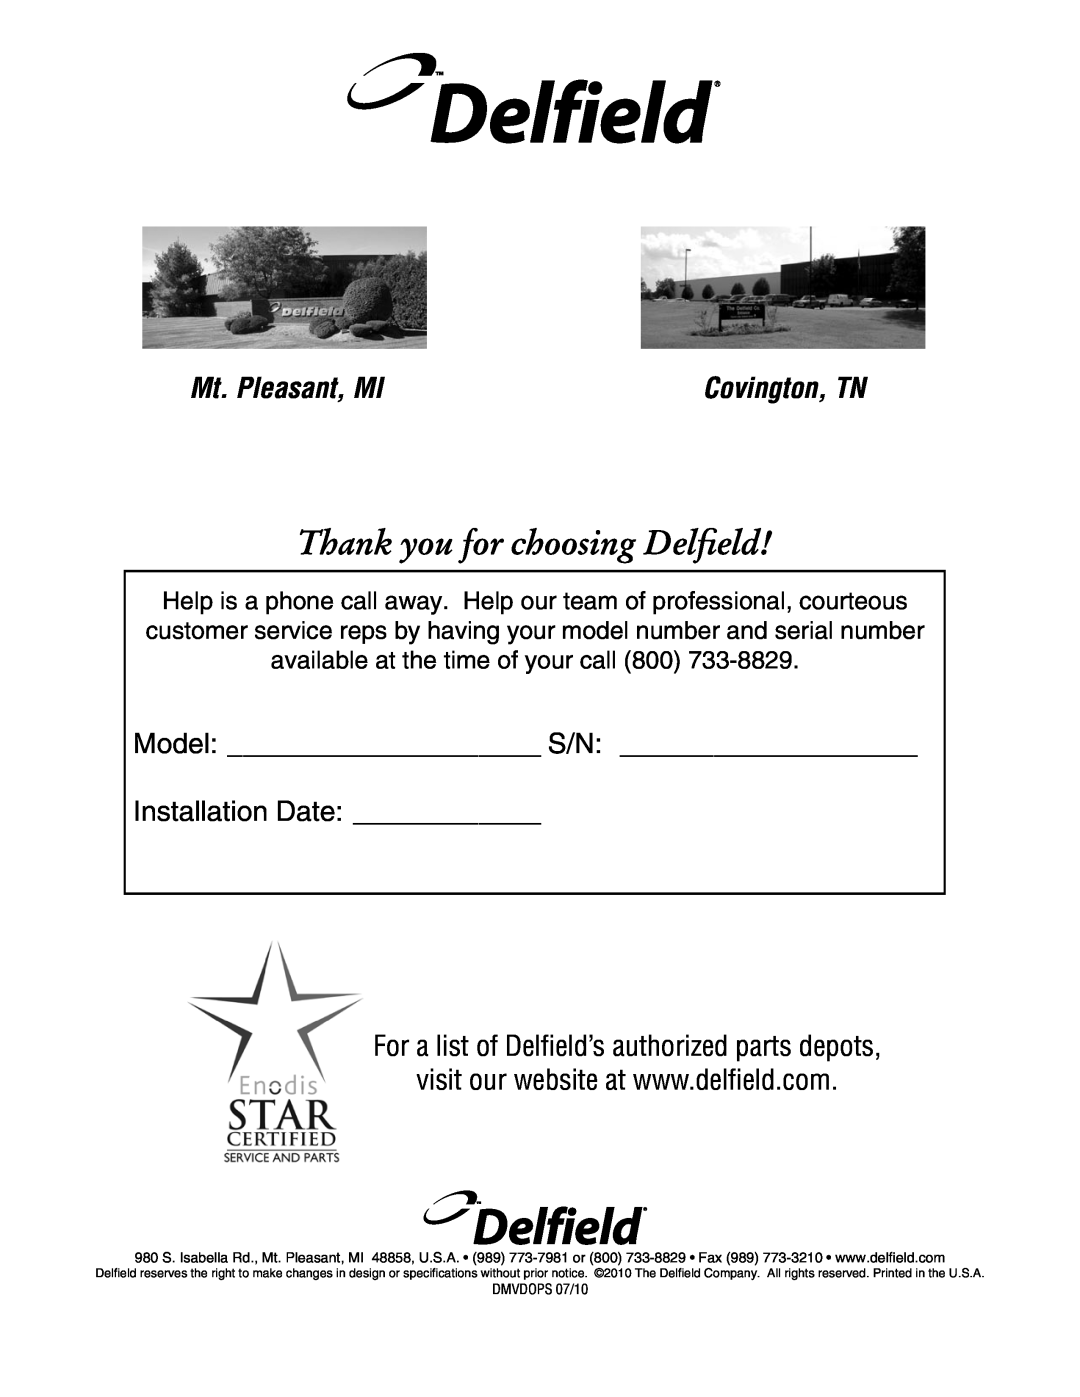 Delfield 18600VD manual Thank you for choosing Delfield, Mt. Pleasant, MI, Model S/N Installation Date, Covington, TN 